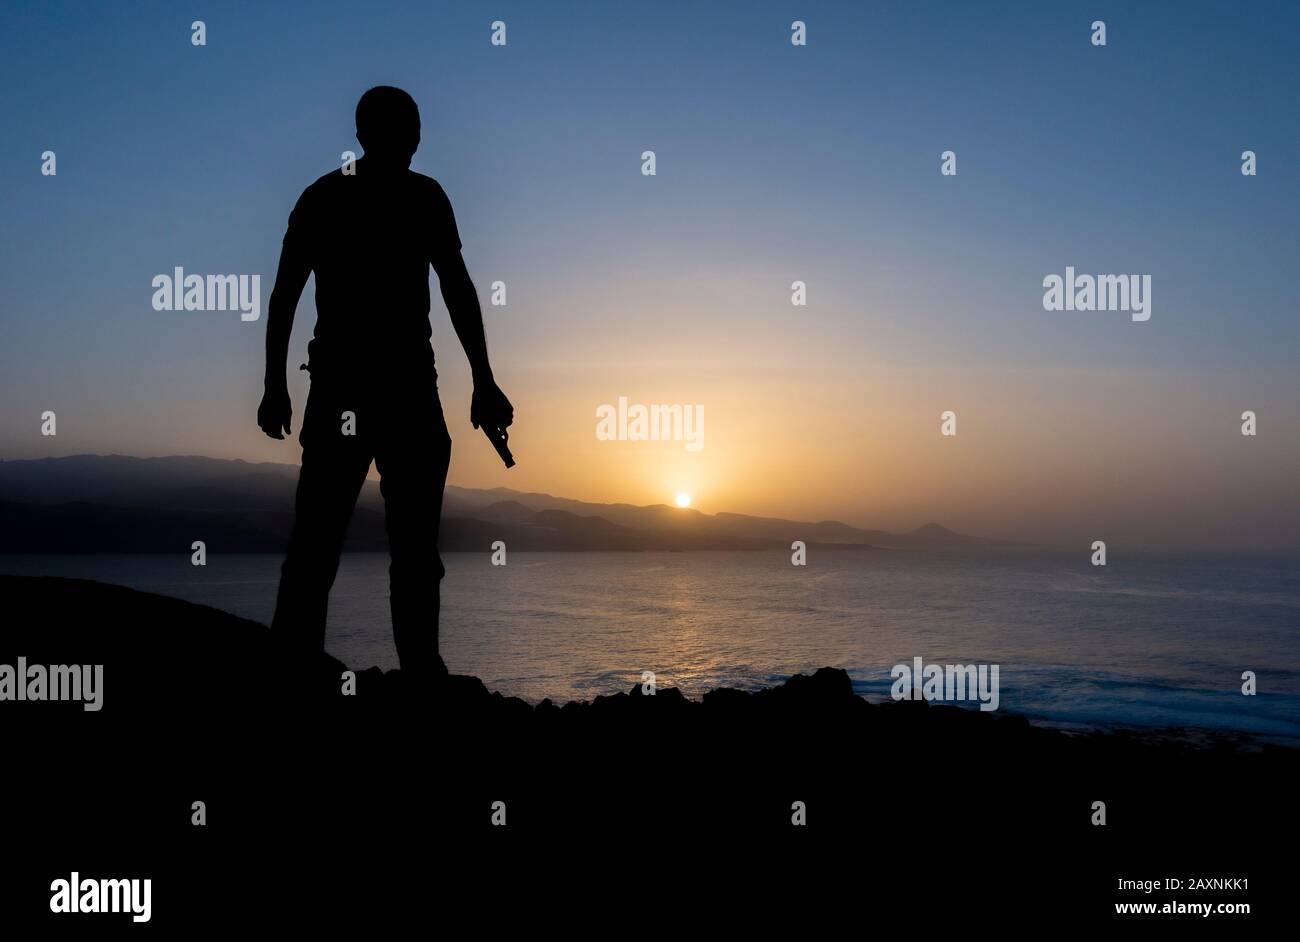 Silhouette of man holding gun at sunset on cliffs overlooking ocean Stock Photo